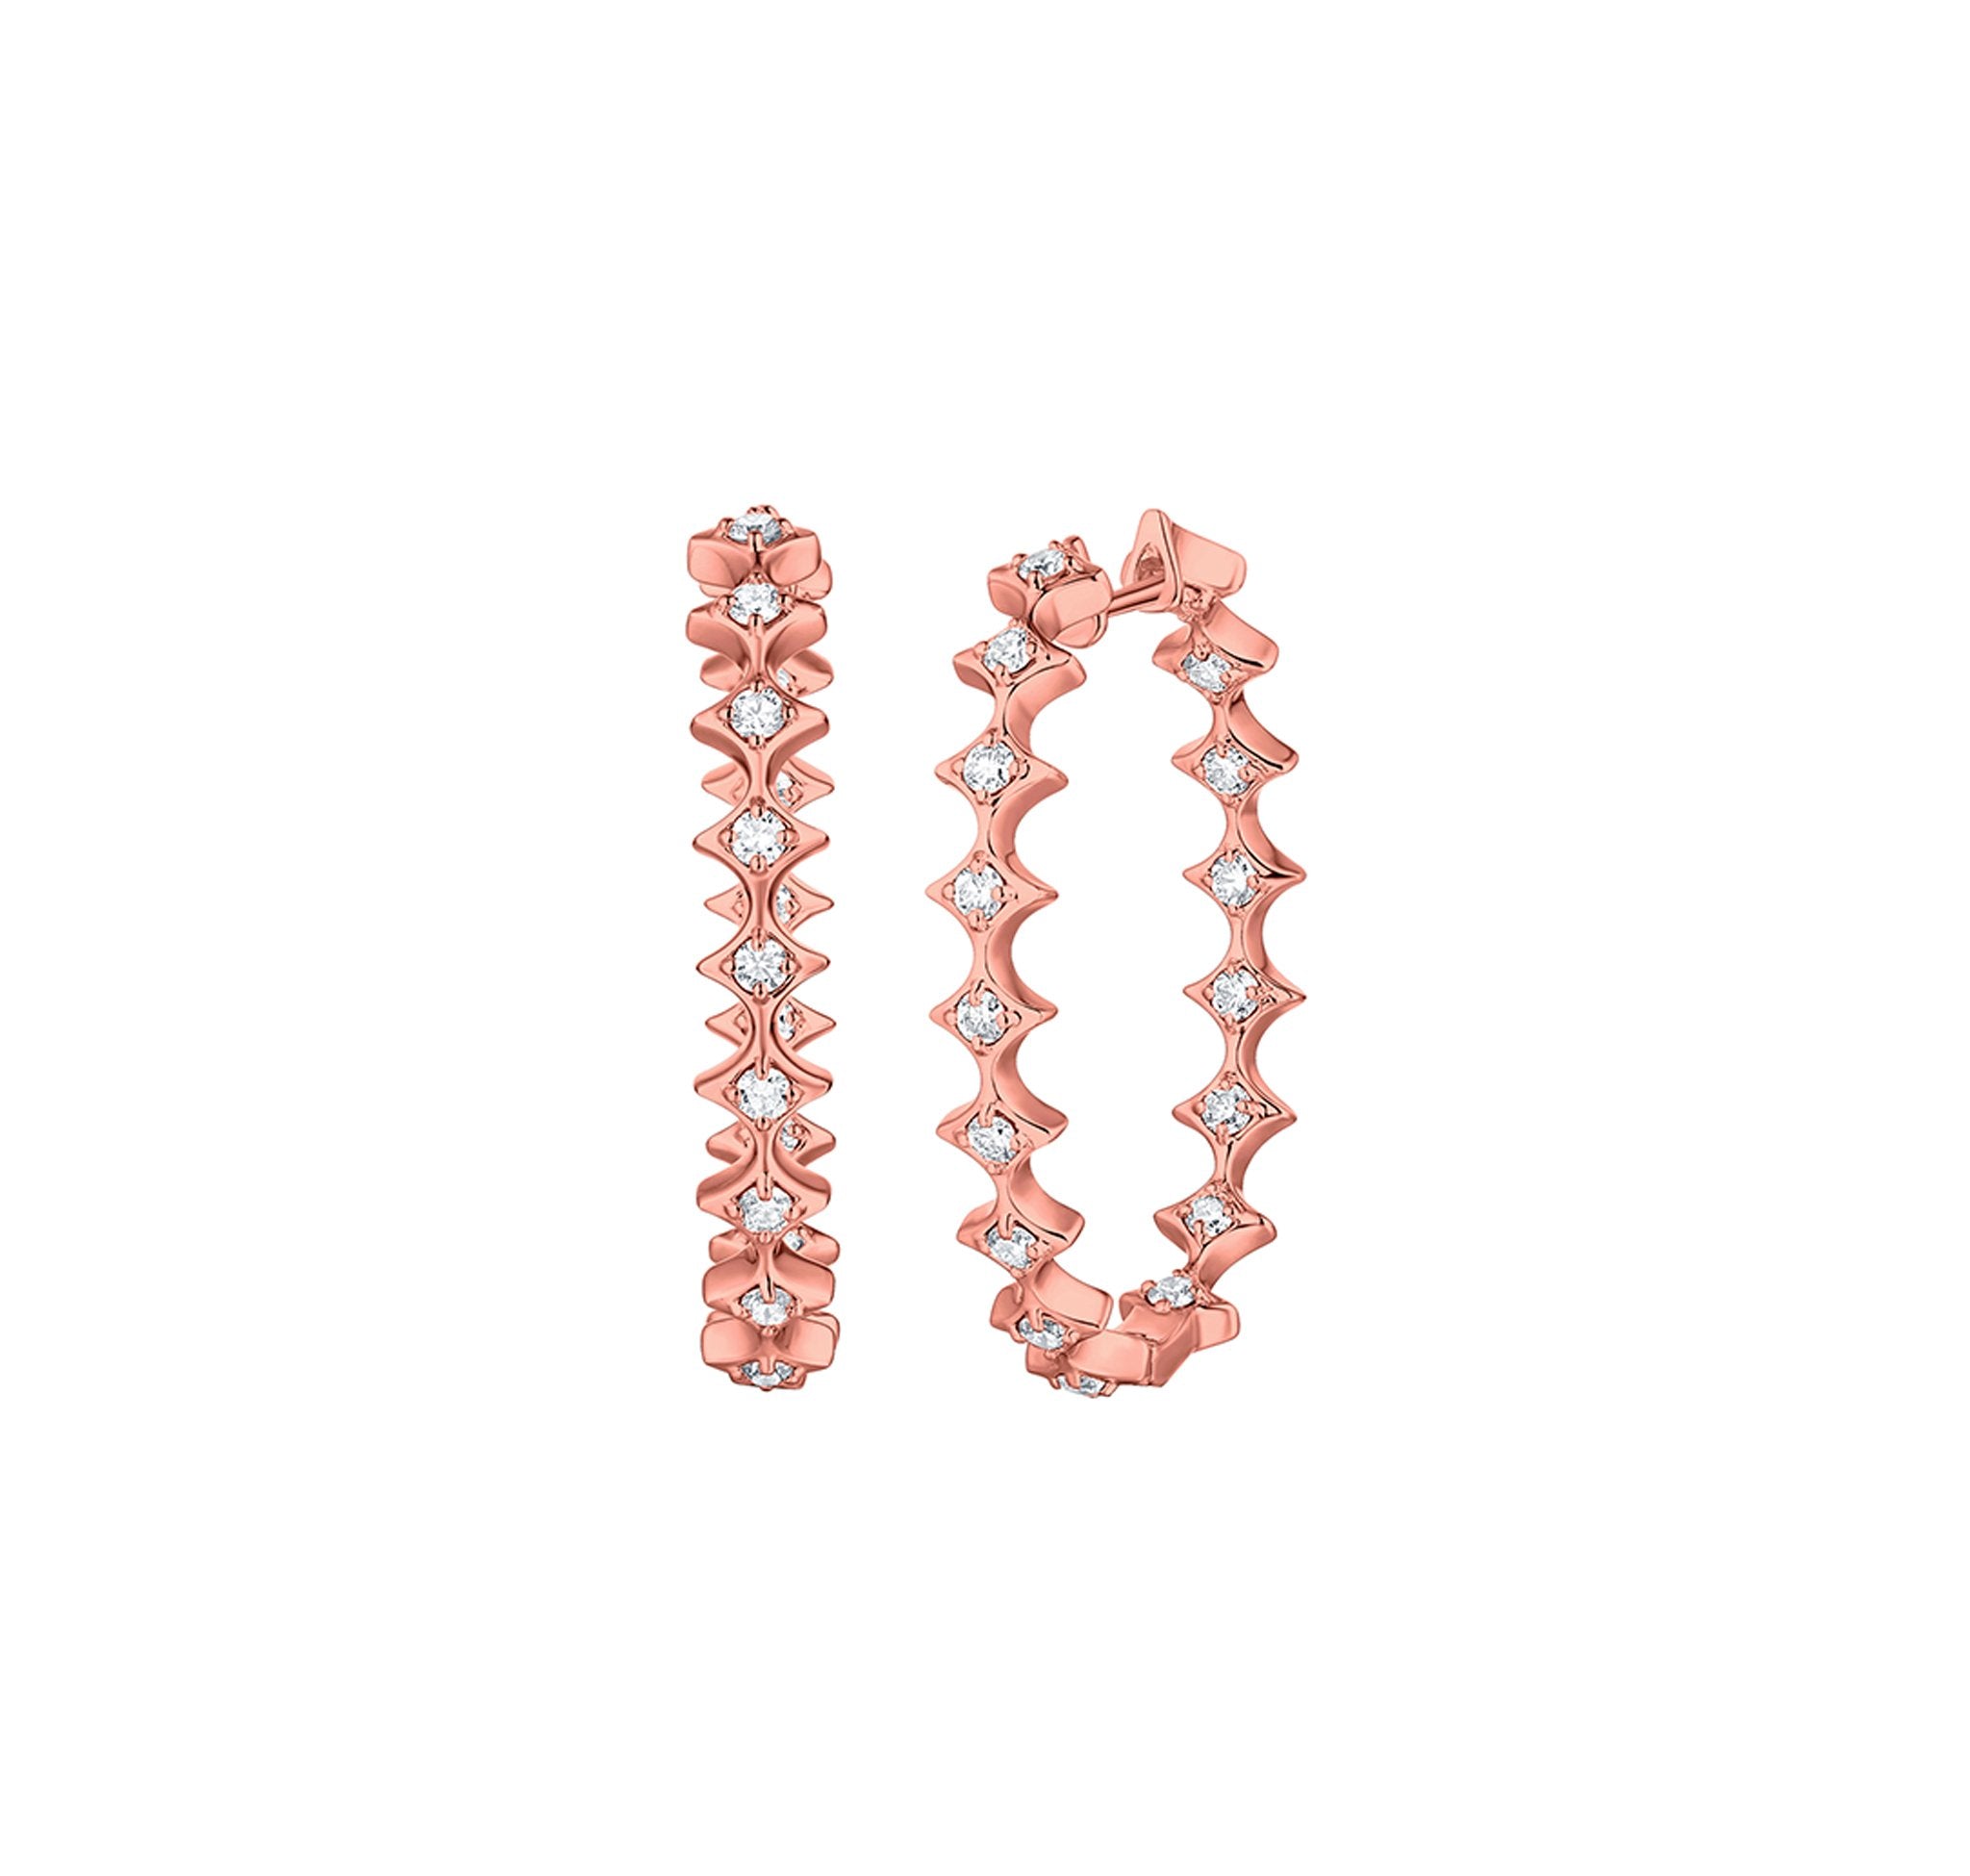 Smiling Rocks Lab Grown Diamond Sparkle Earrings in 10K 1.02ctw Rose Gold 